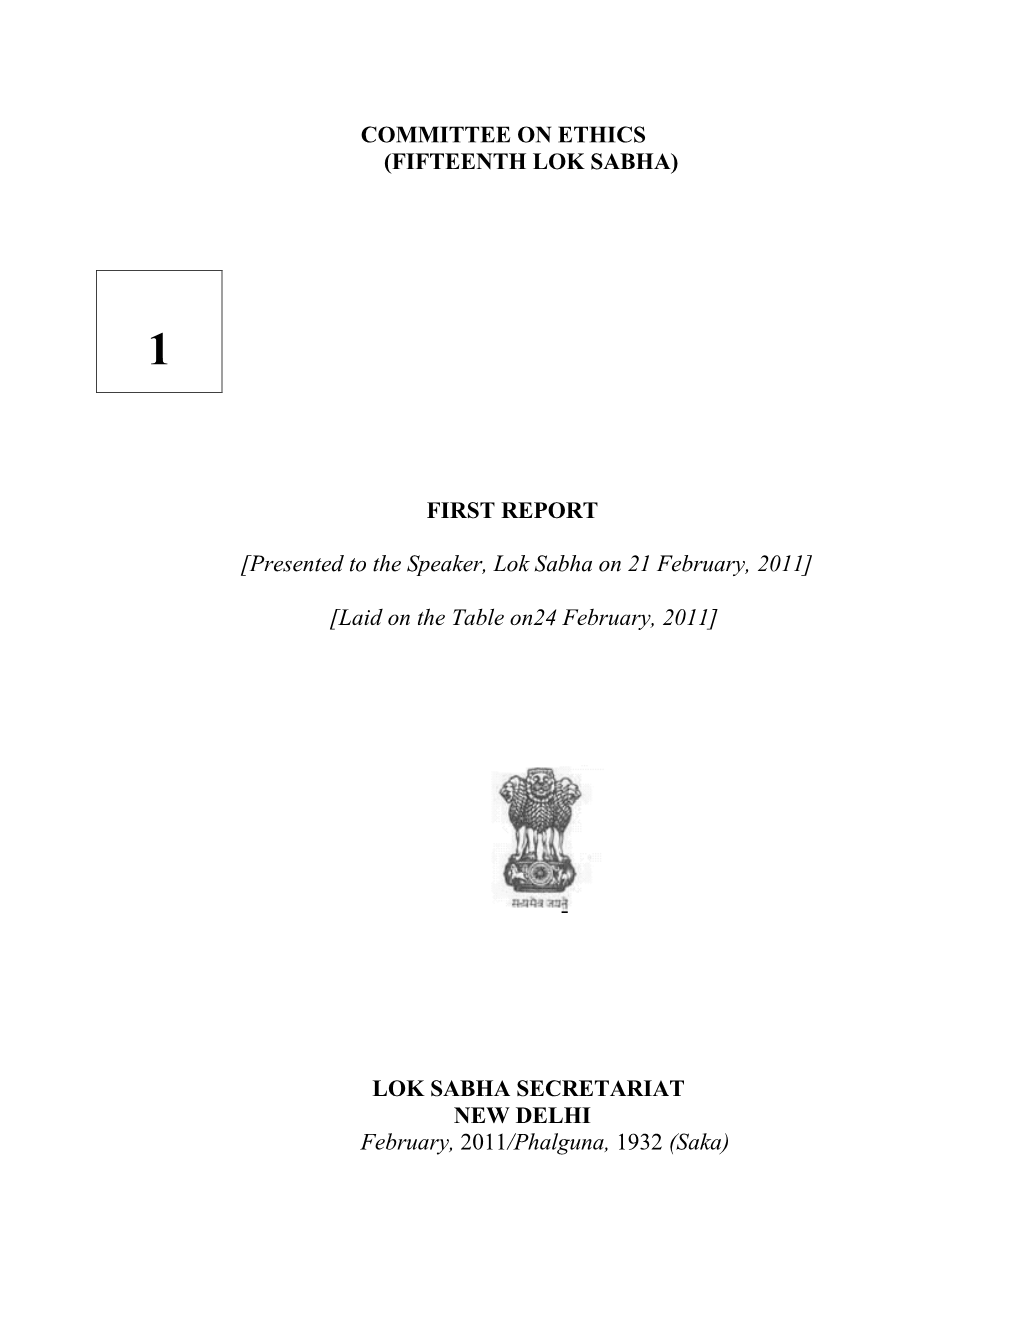 Committee on Ethics (Fifteenth Lok Sabha) First